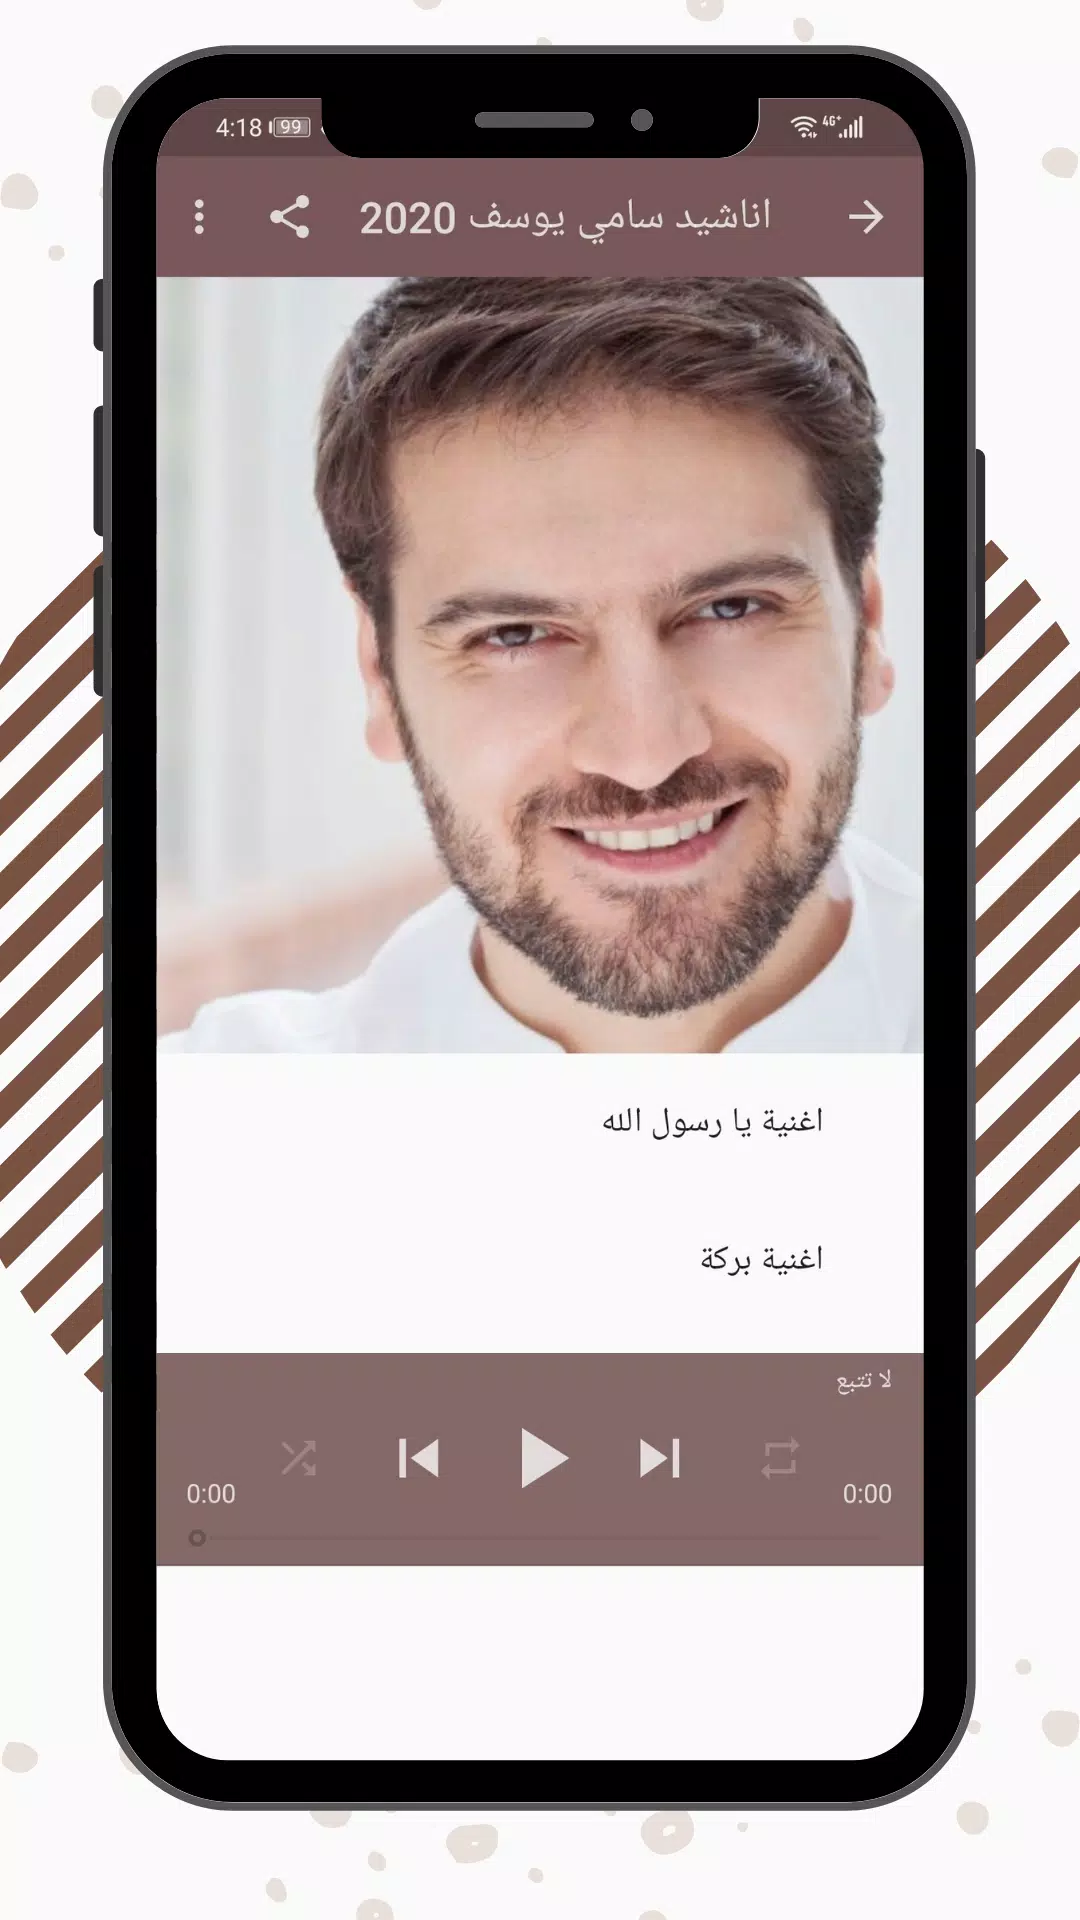 اناشيد سامي يوسف APK für Android herunterladen